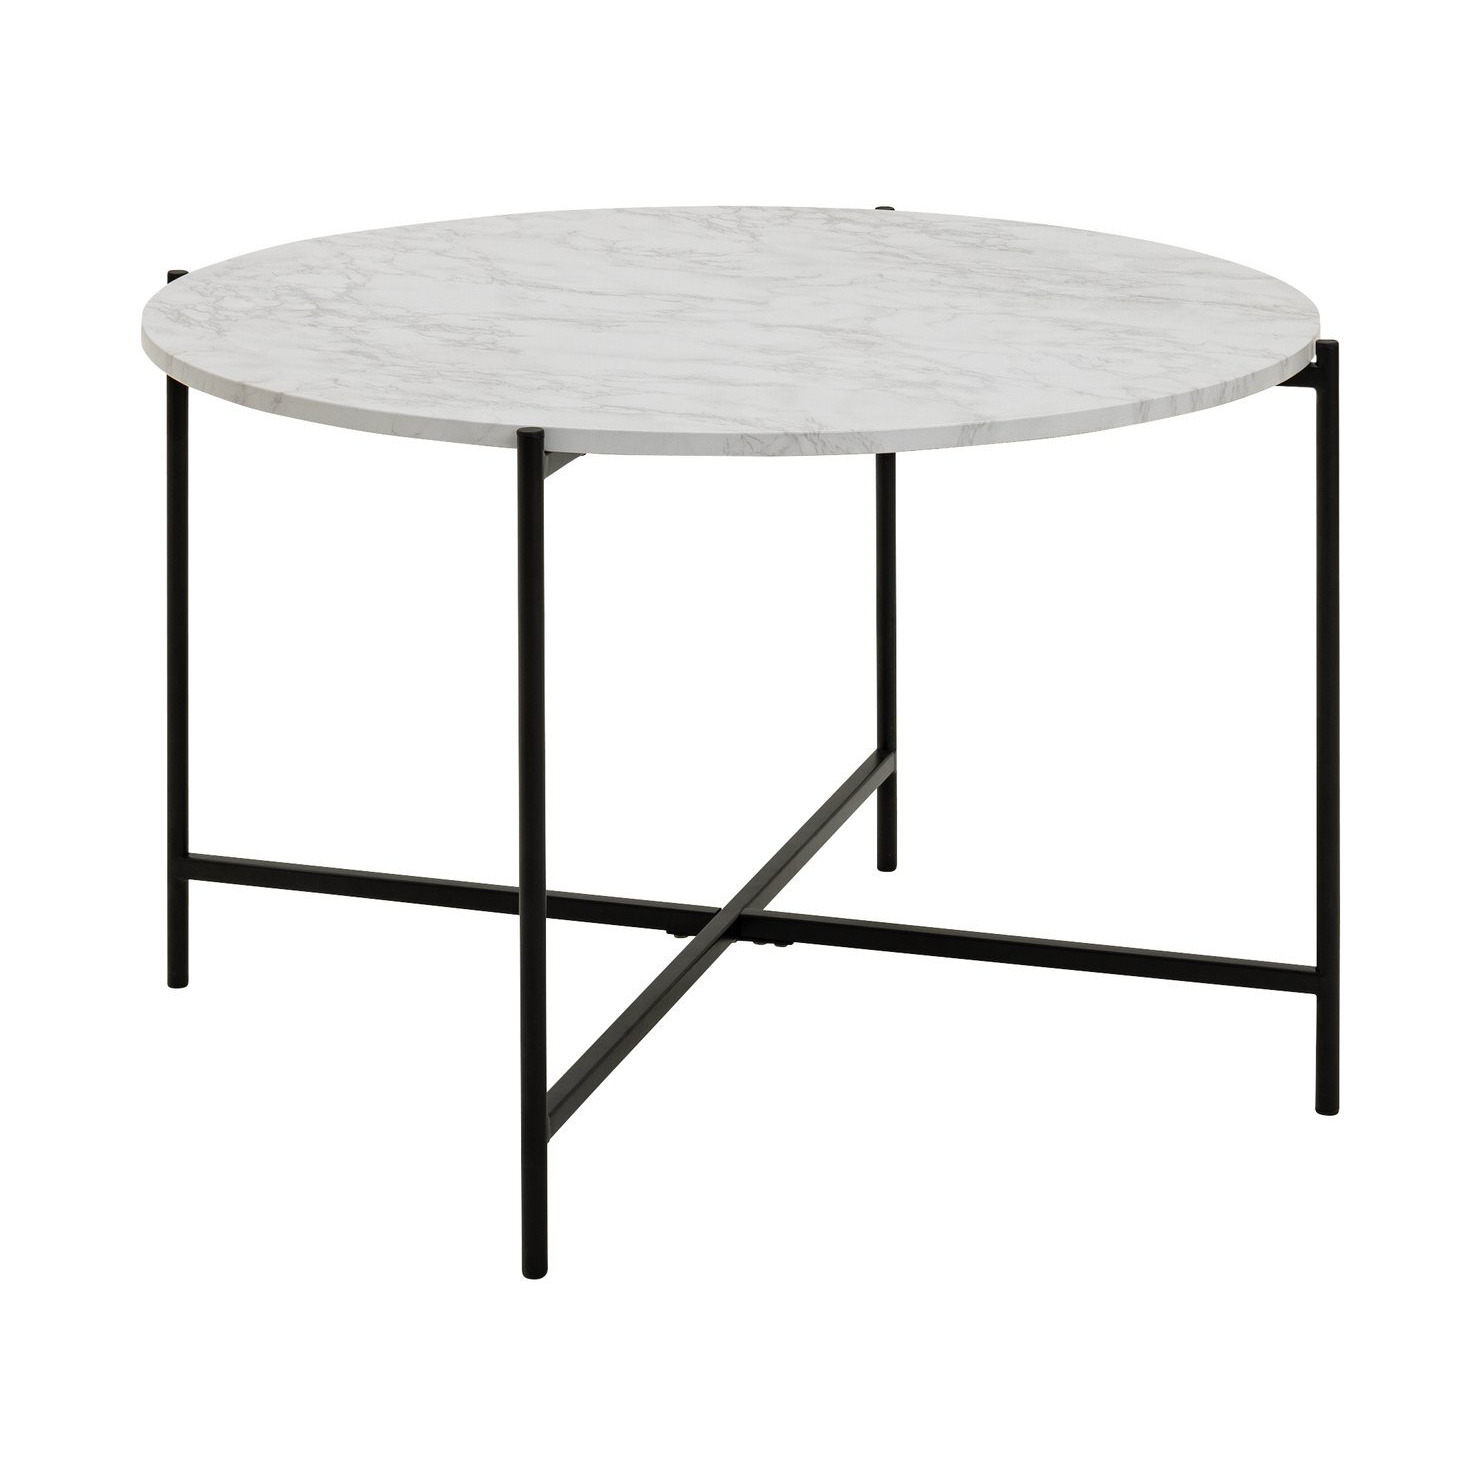 Argos Home Jules Round Coffee Table - Black & White - image 1